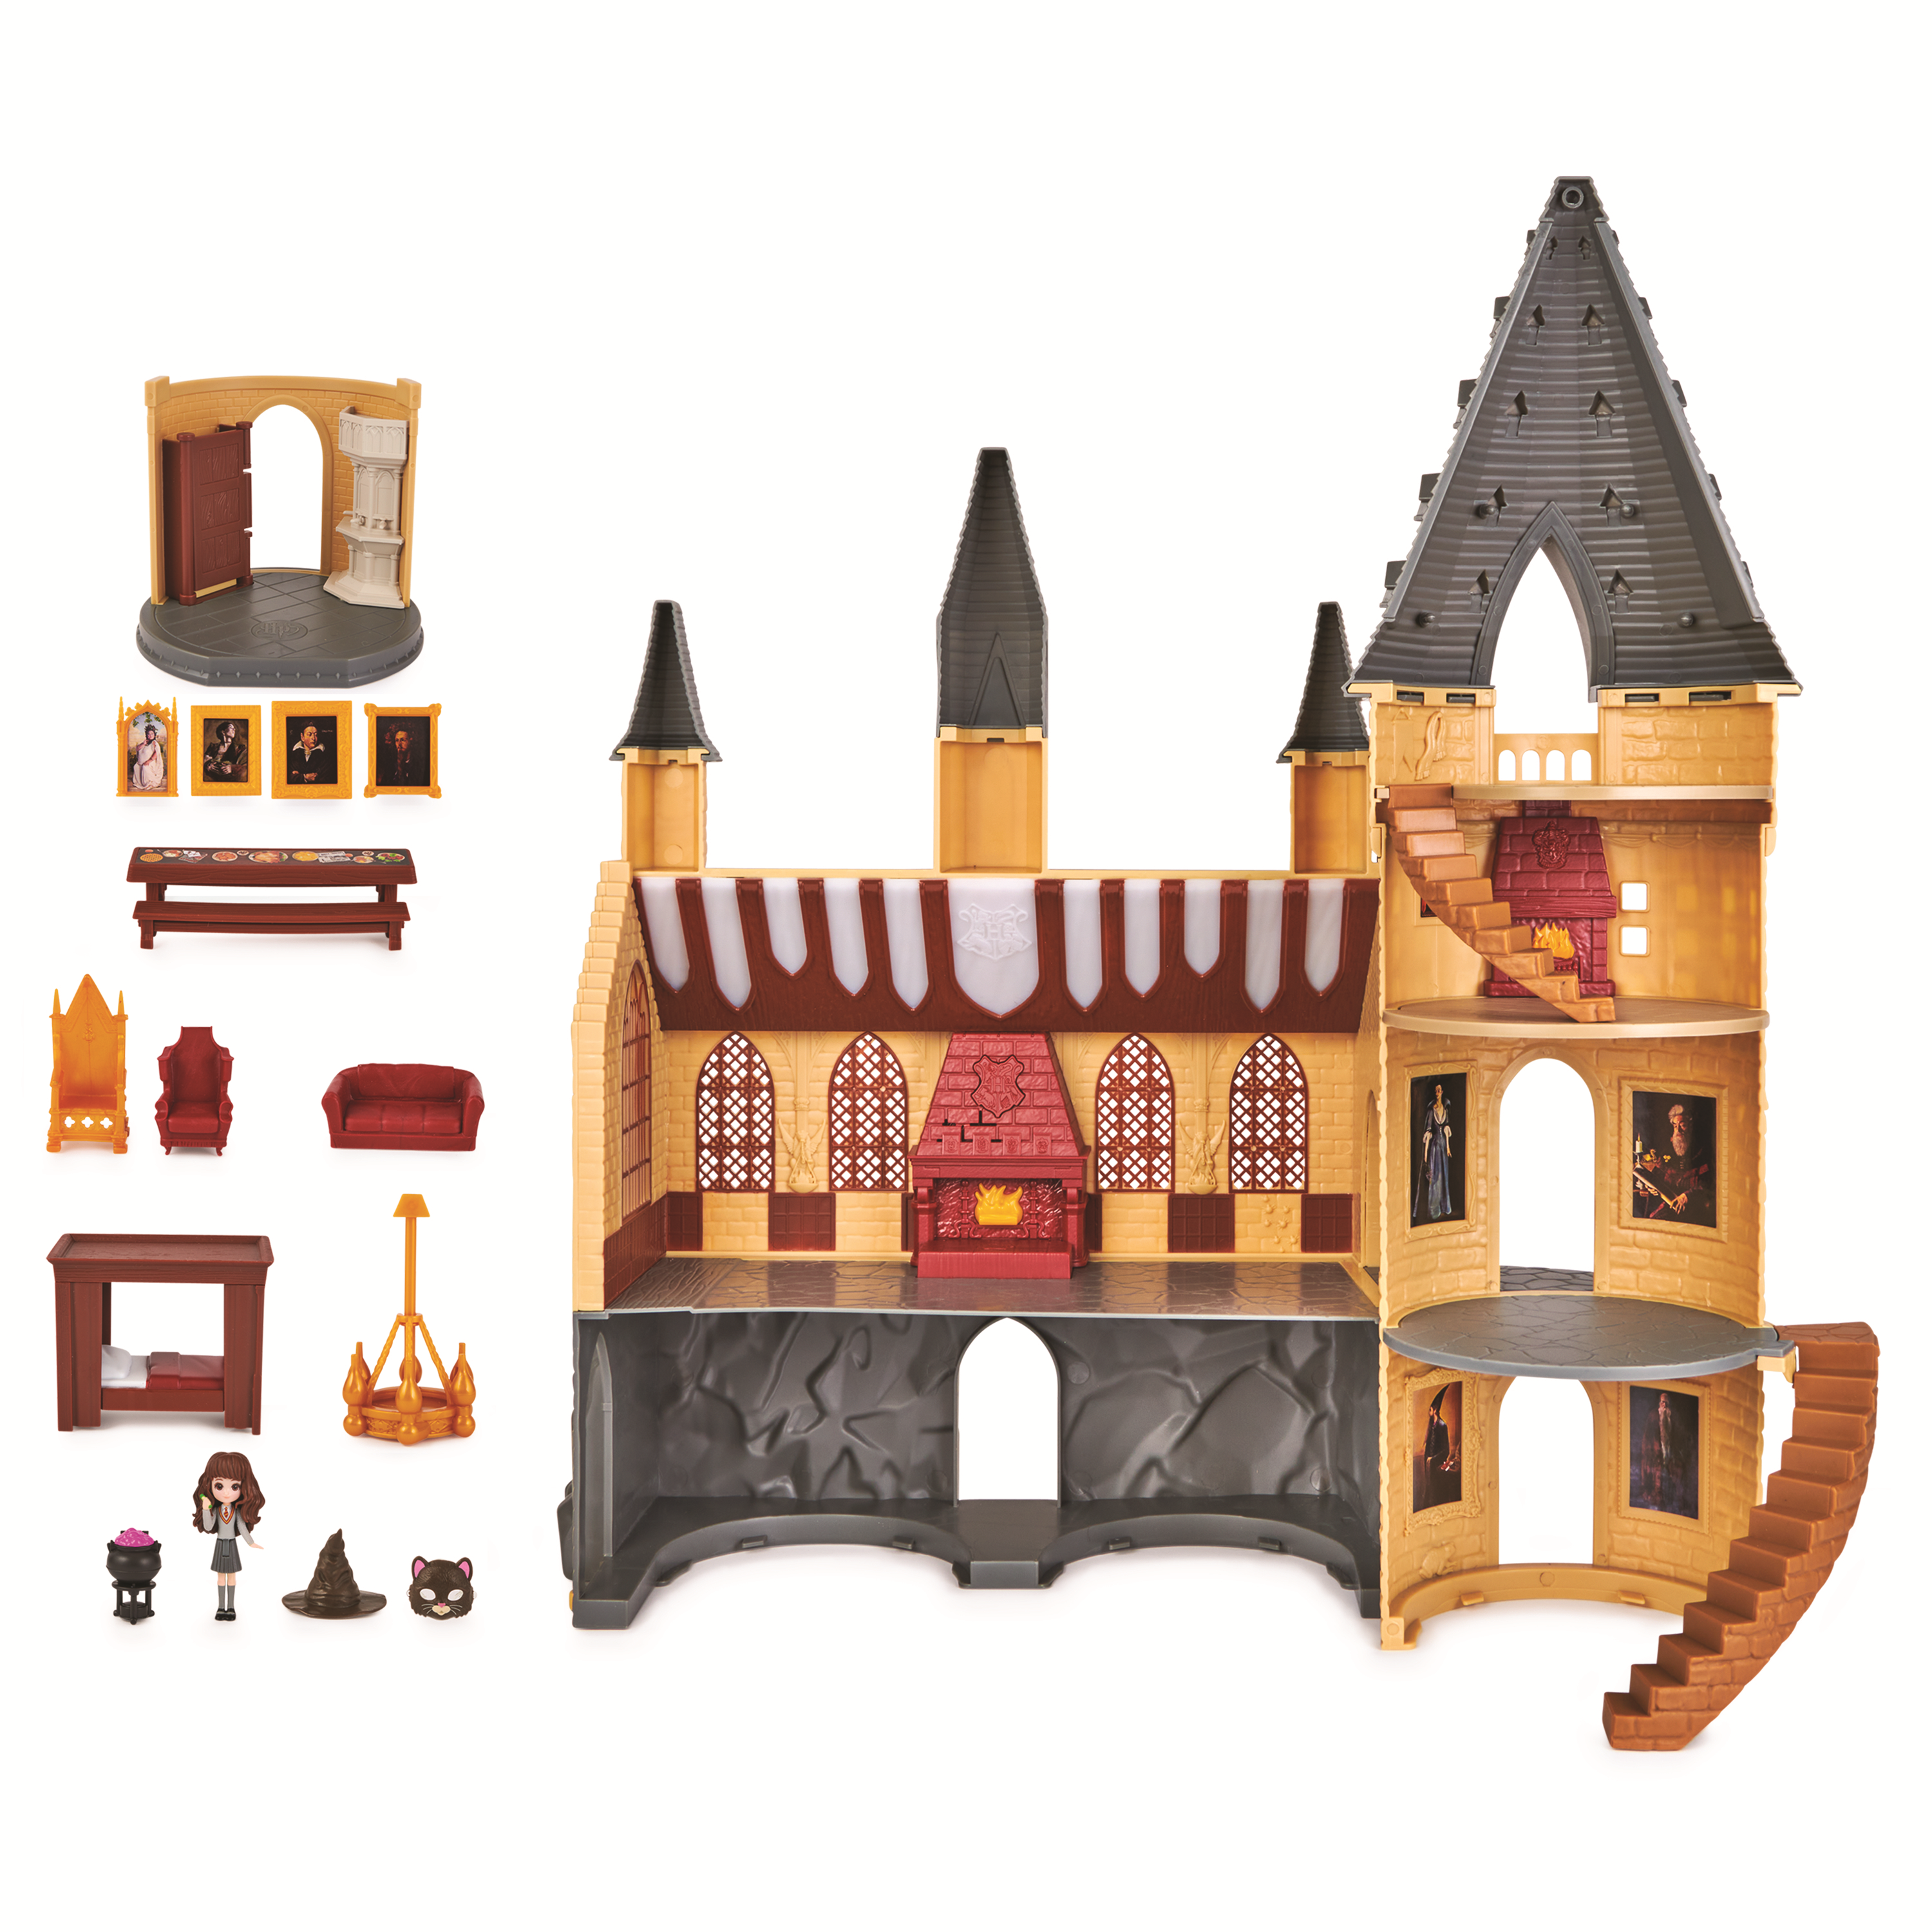 Harry potter - castello di hogwarts wizarding world - Harry Potter